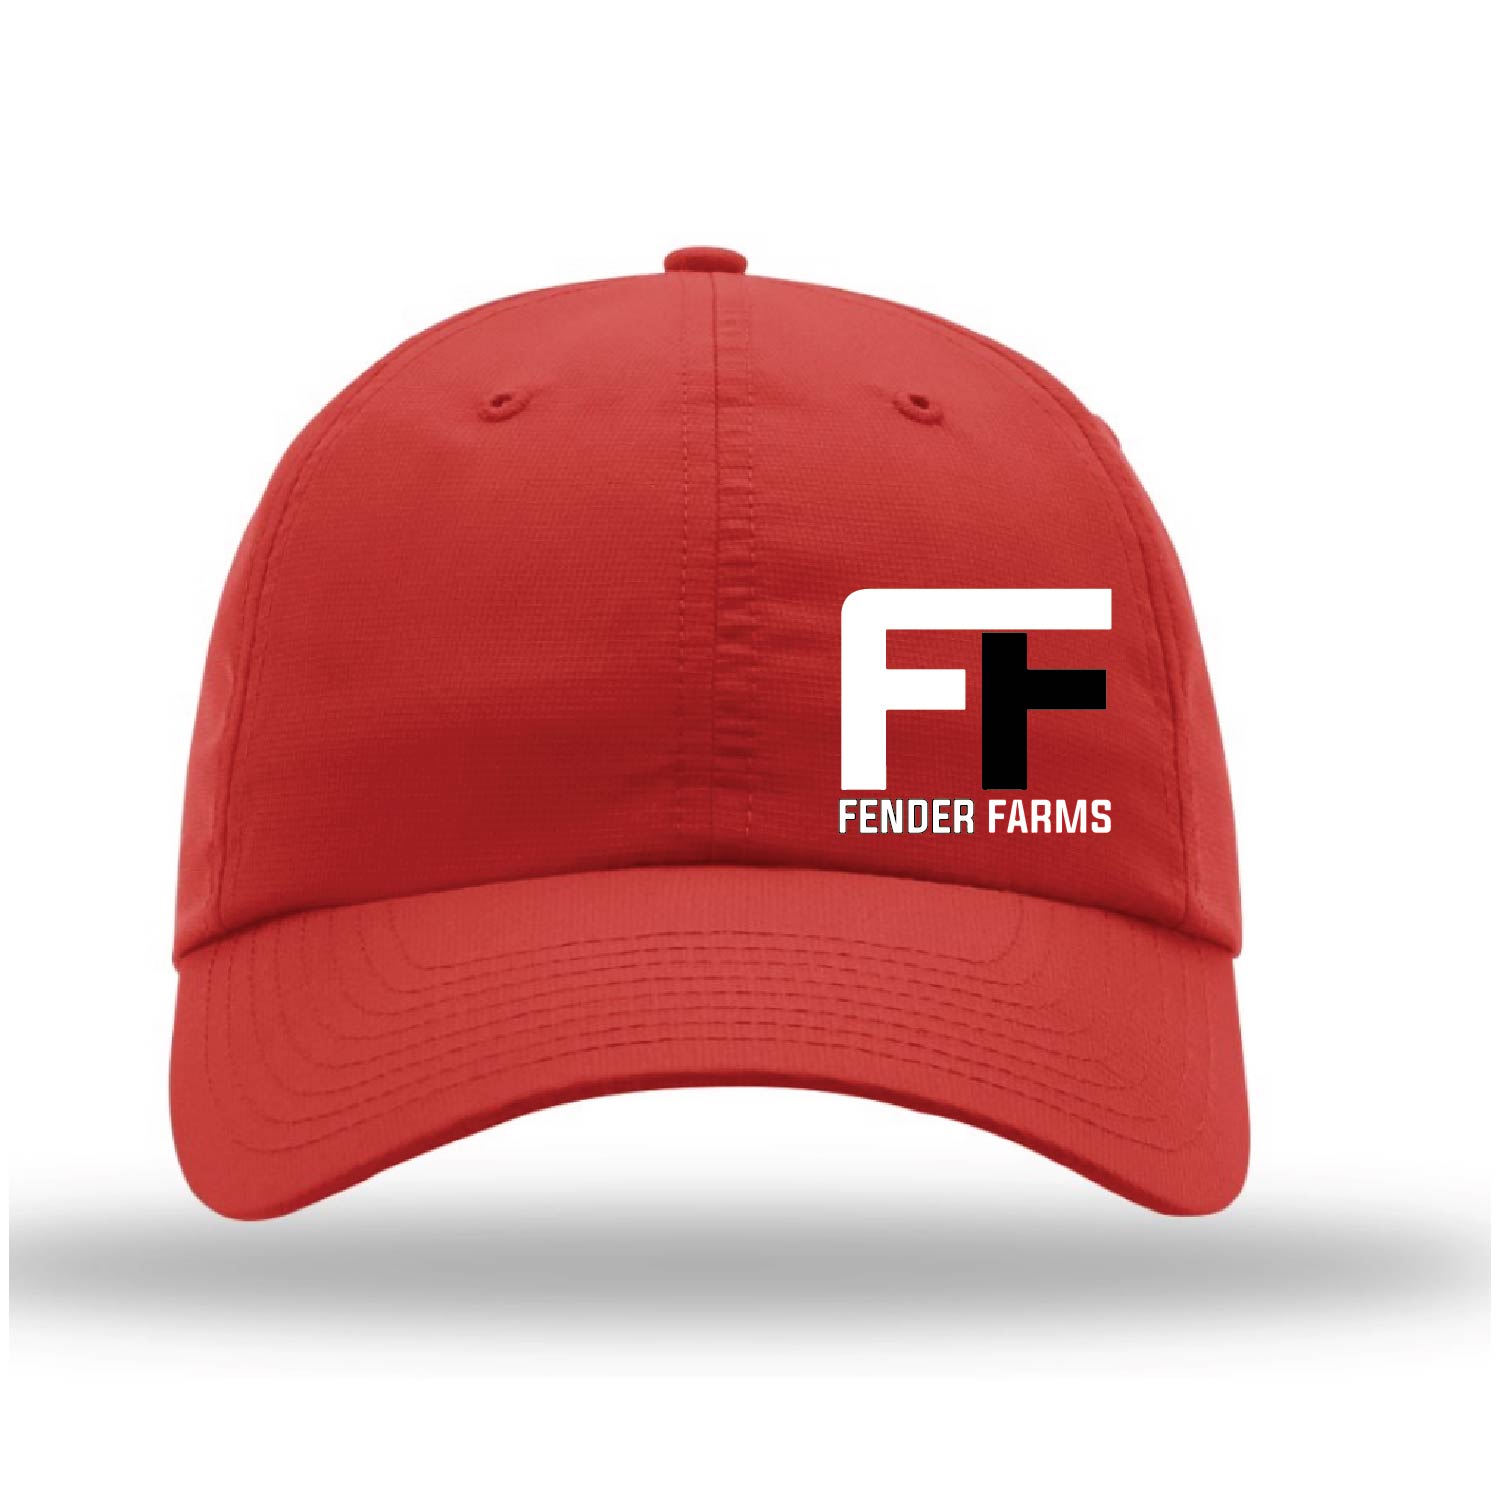 Fender Farms Hats